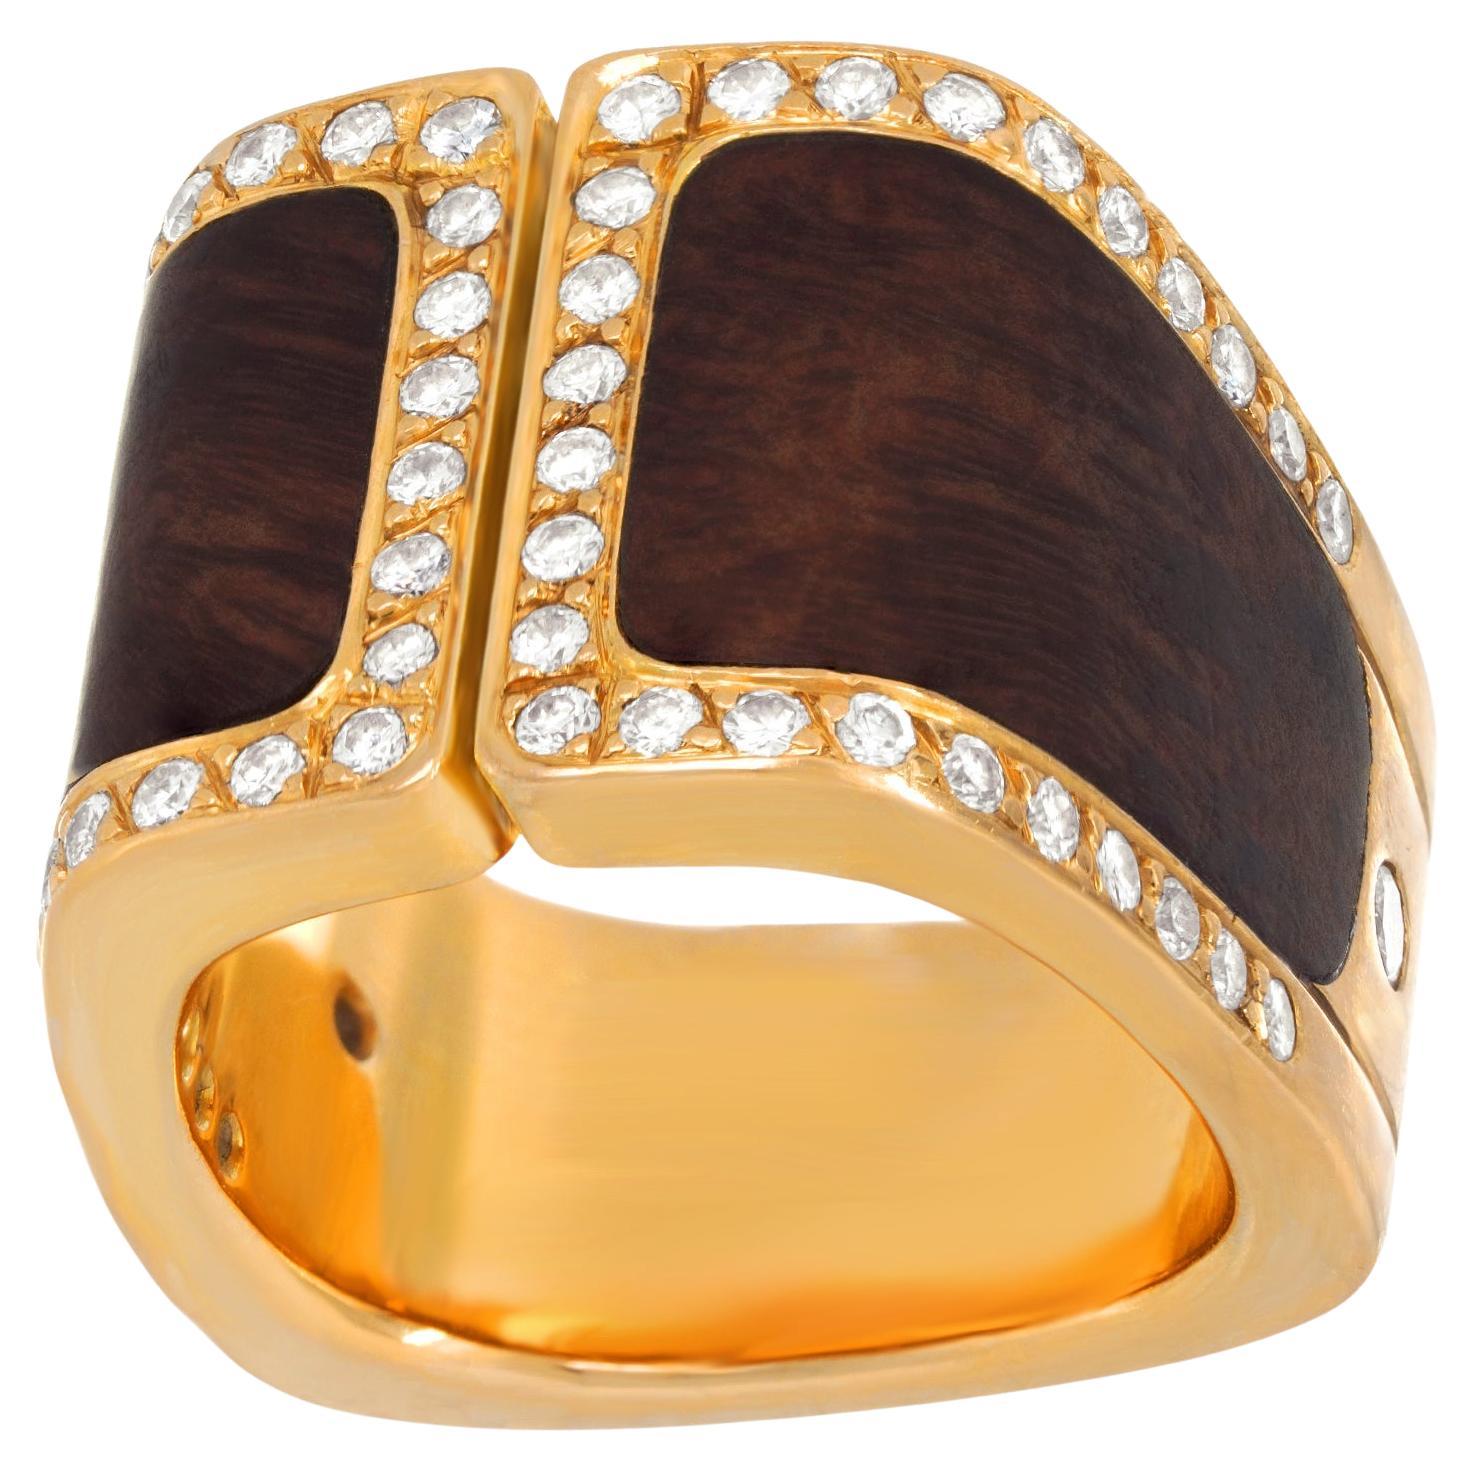 Paul Binder Sixties Swiss Modern Ring For Sale